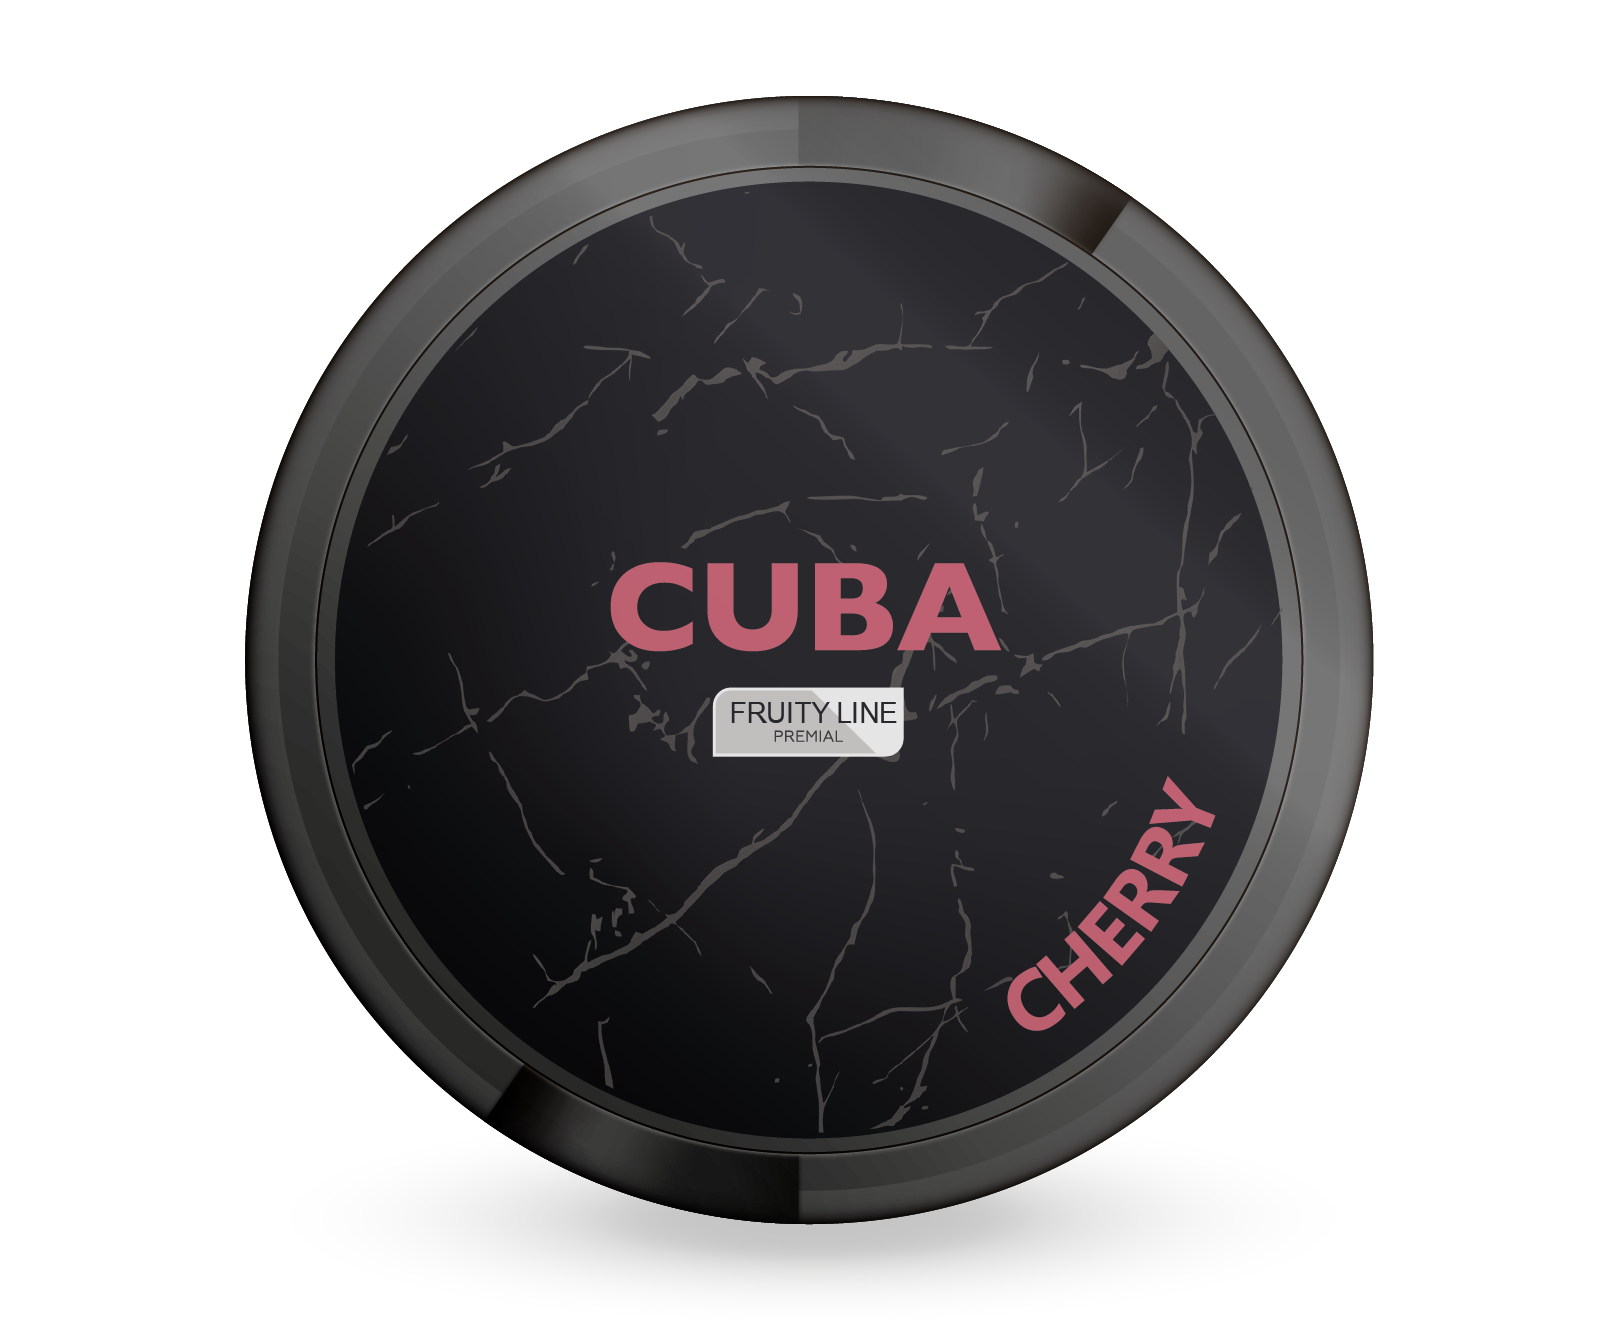 Cuba Black Cherry Top